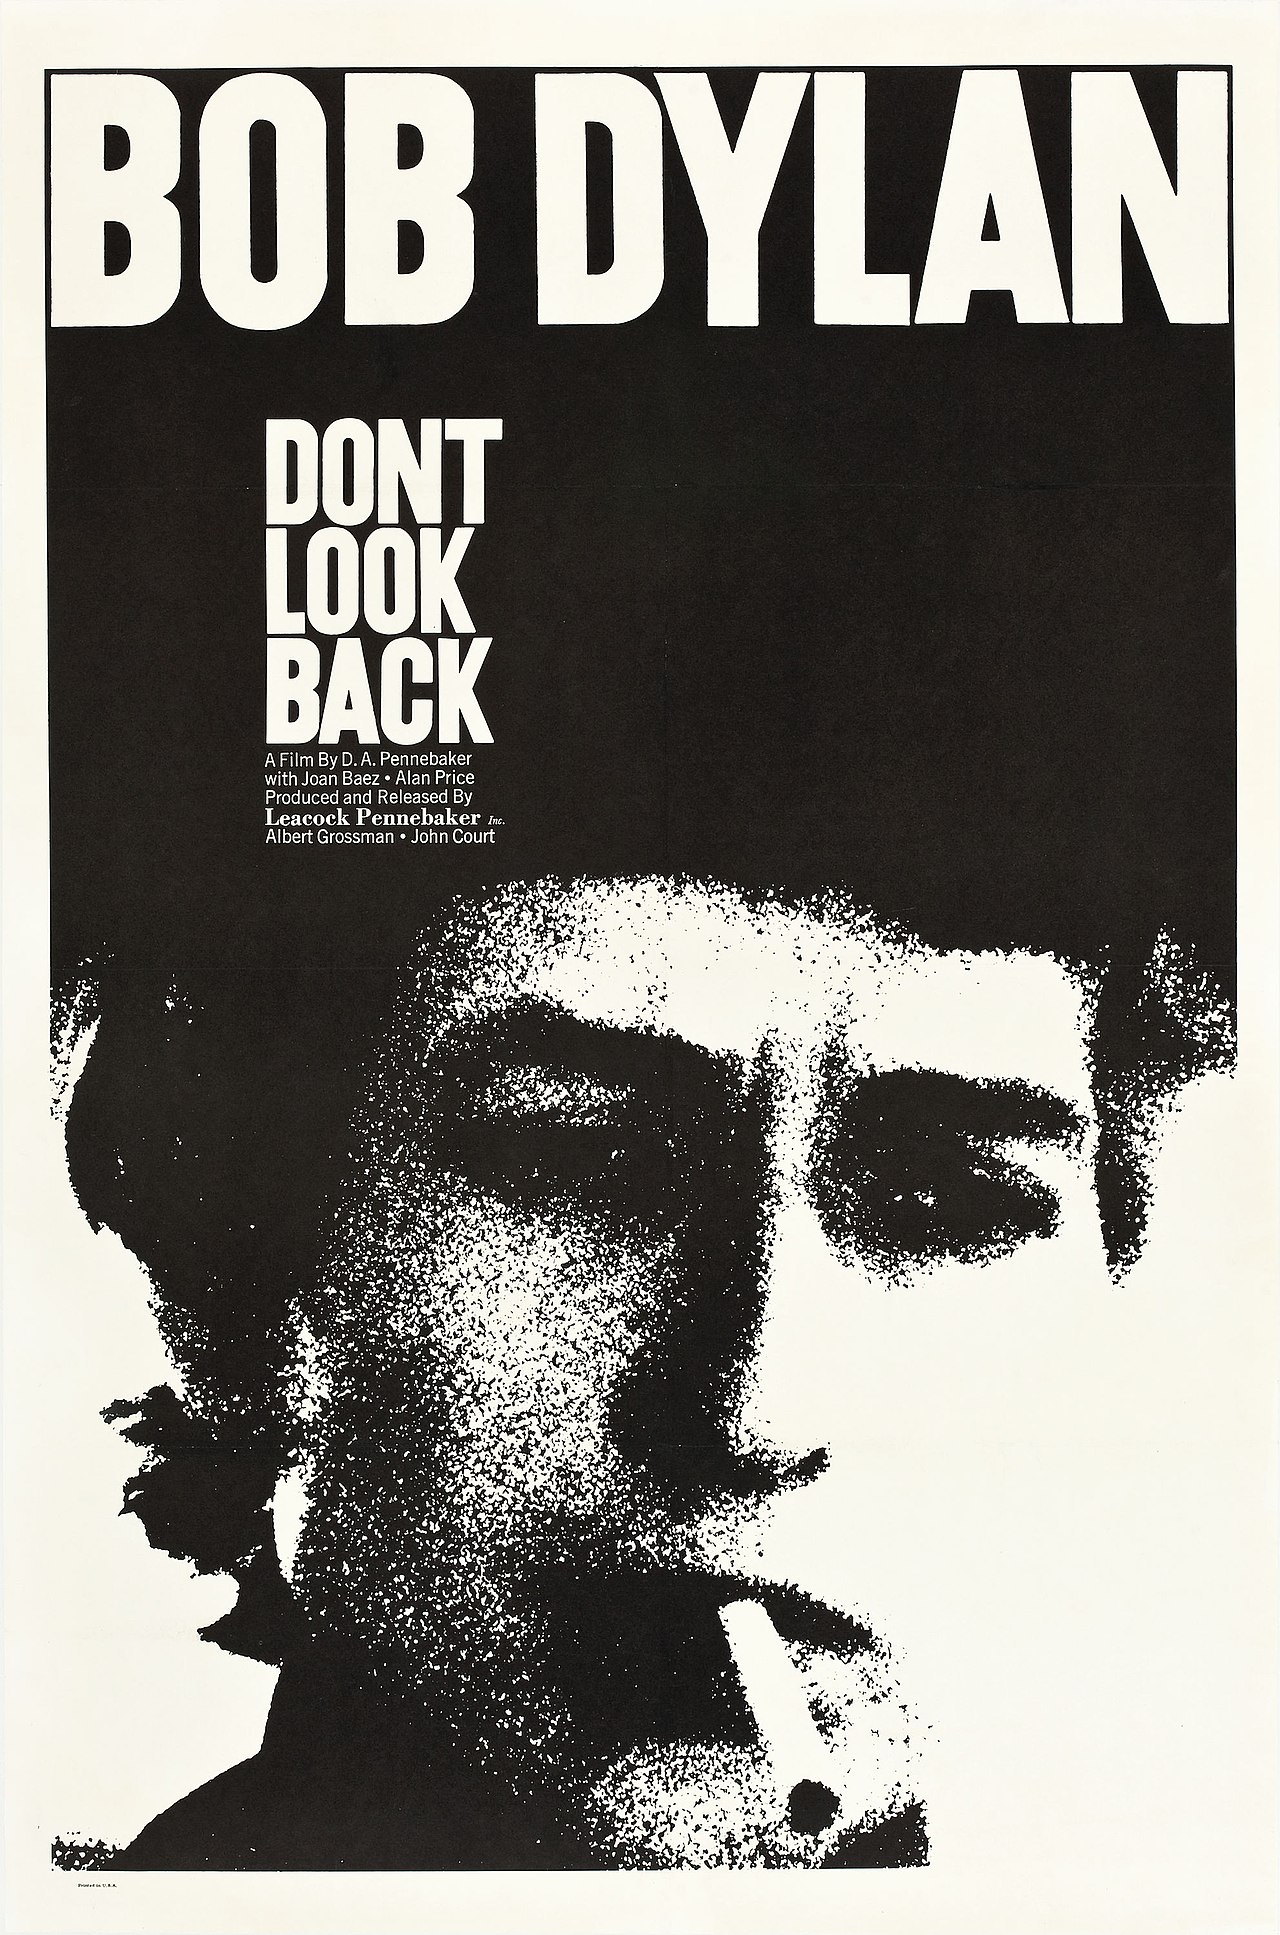 The cinéma vérité documentary Dont Look Back (1967) follows Dylan on his 1965 tour of England.